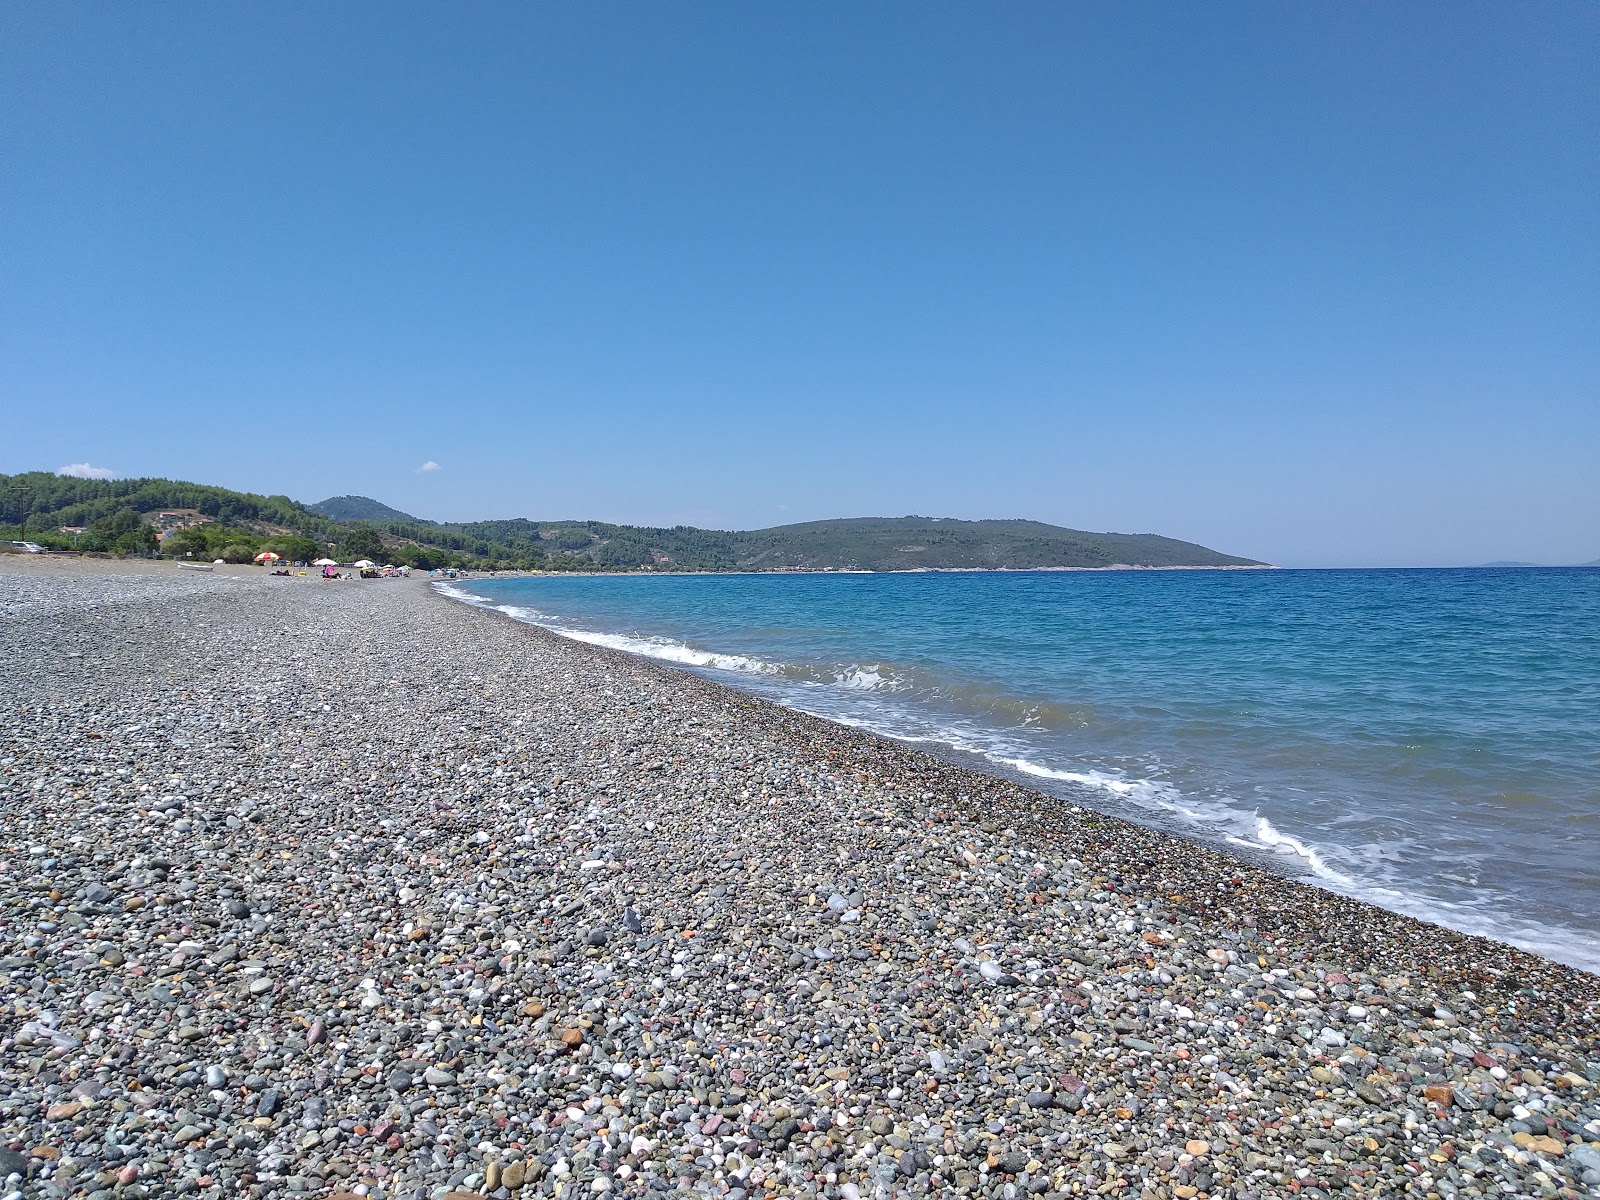 Photo of Elinika beach with gray pebble surface